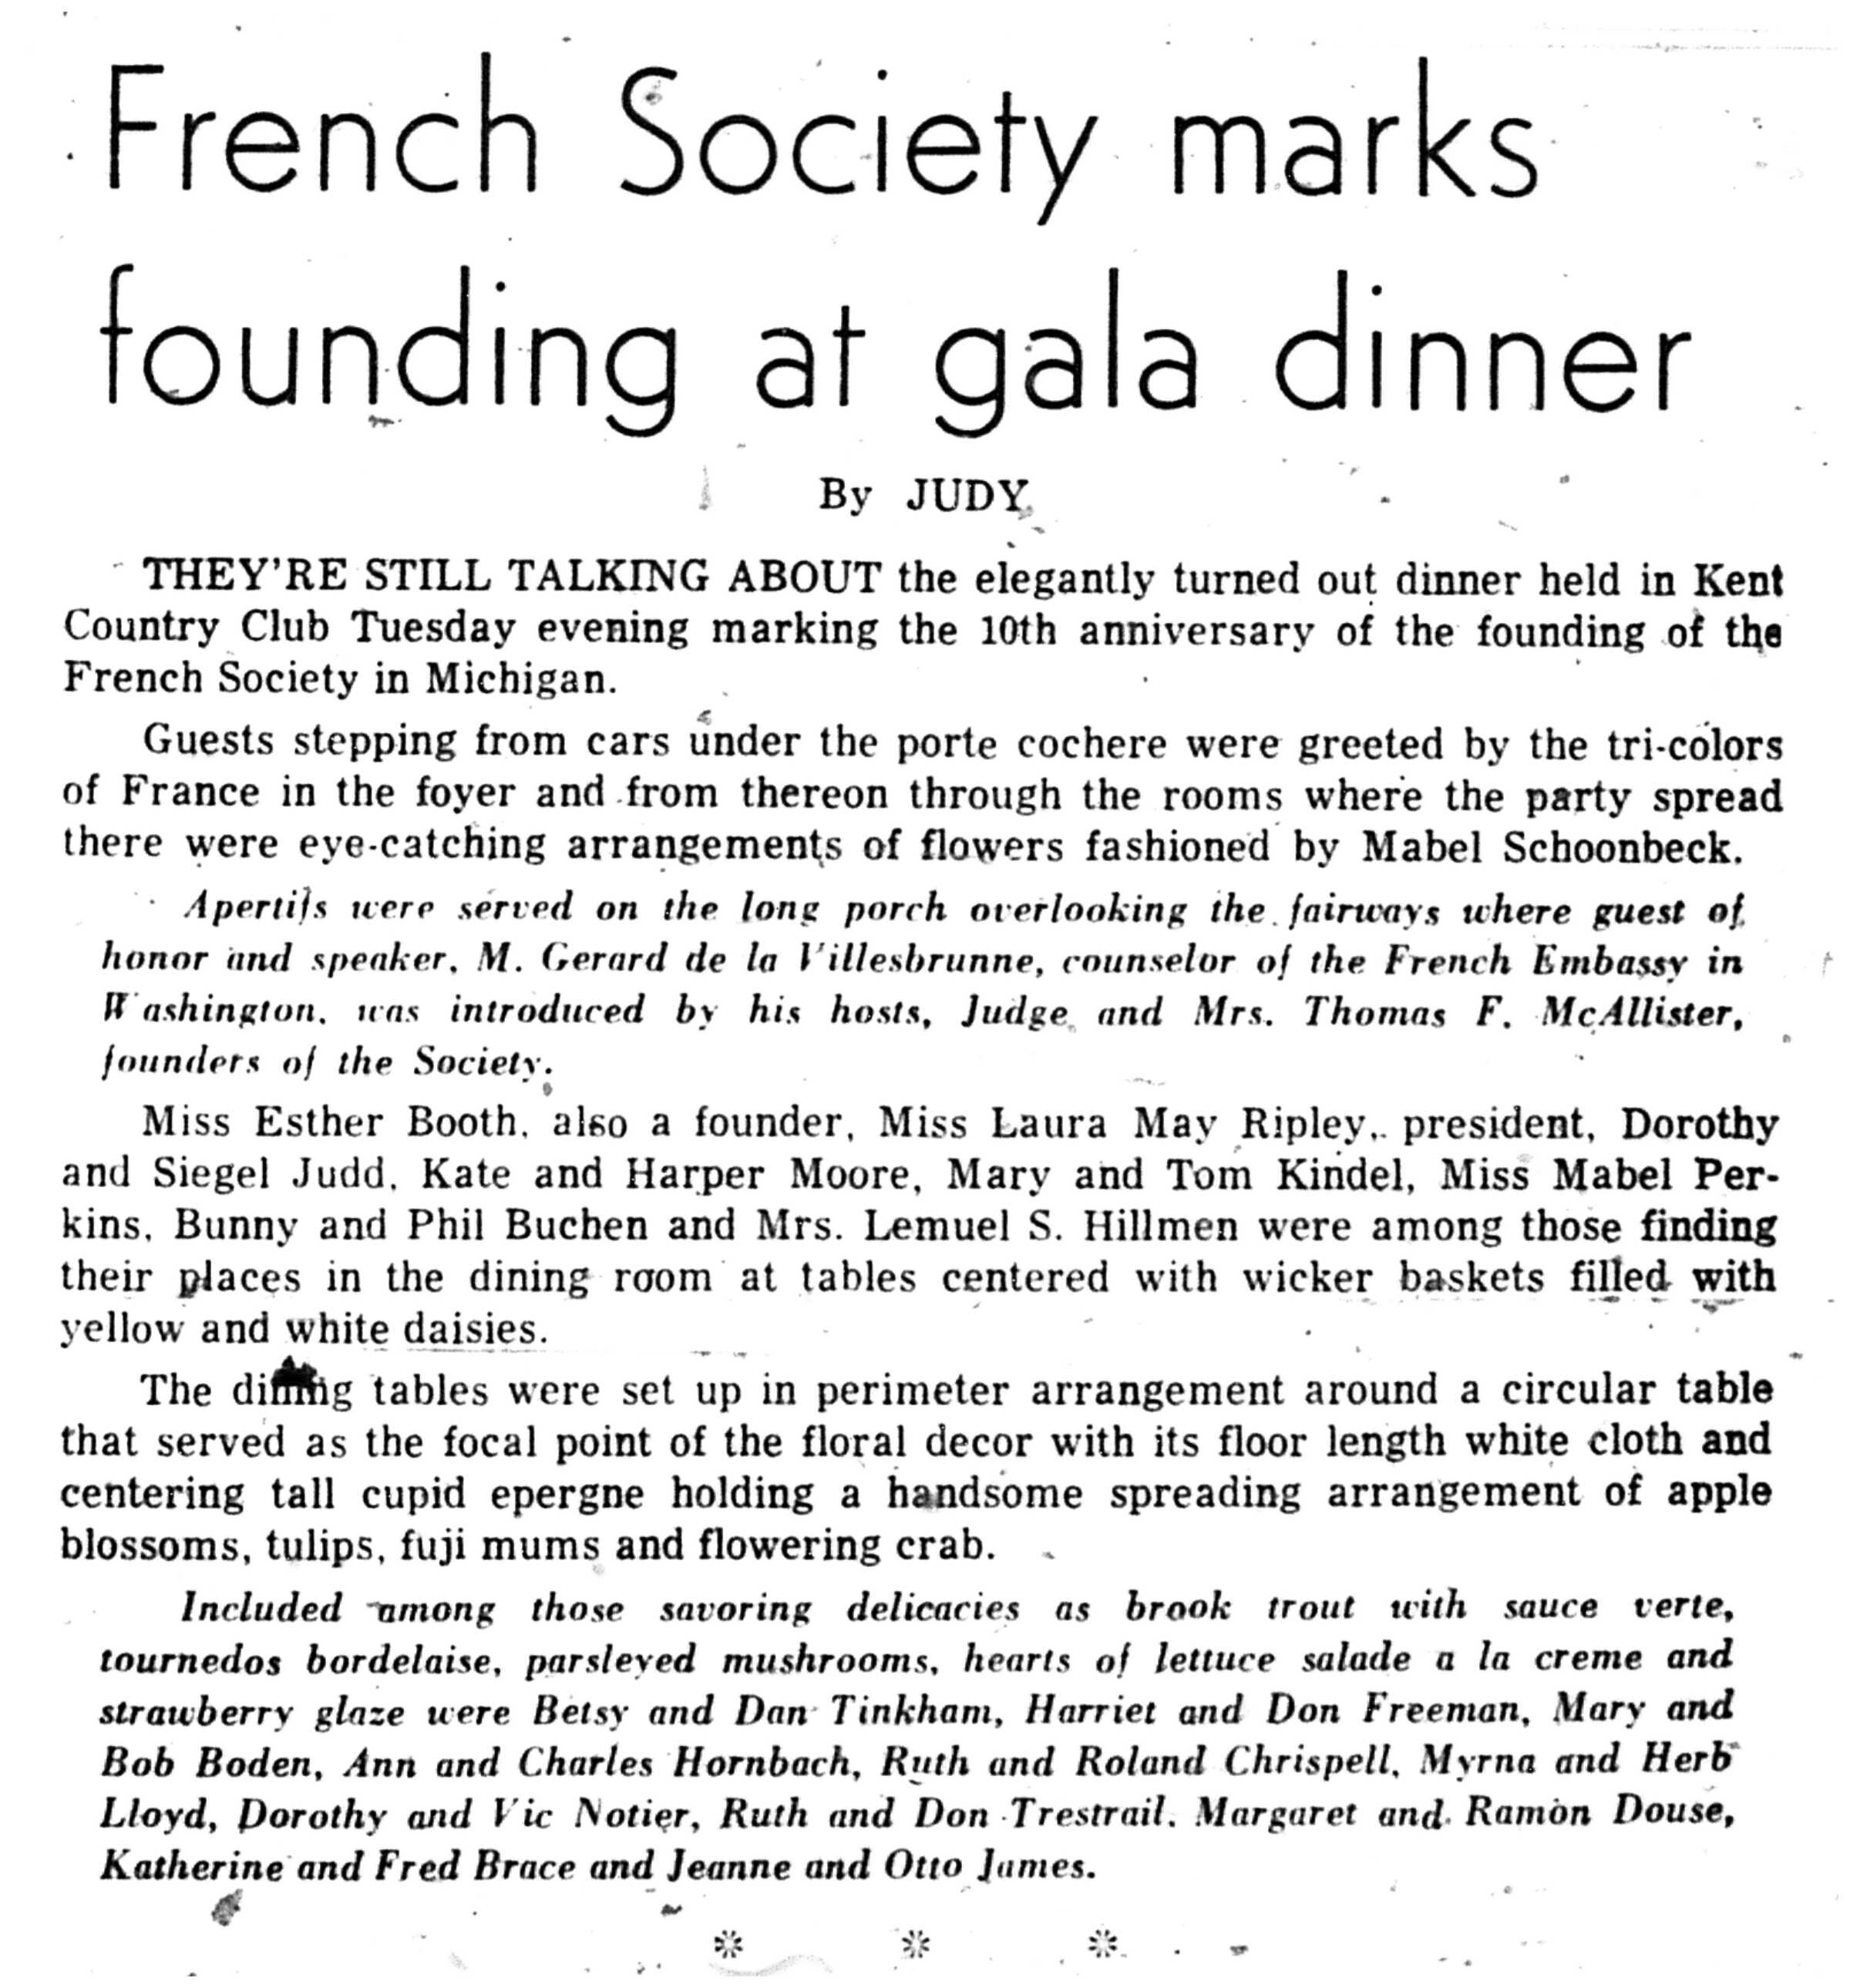 French Society marks founding at gala dinner 29 May 1966 Grand Rapids Press pg. 49.jpg